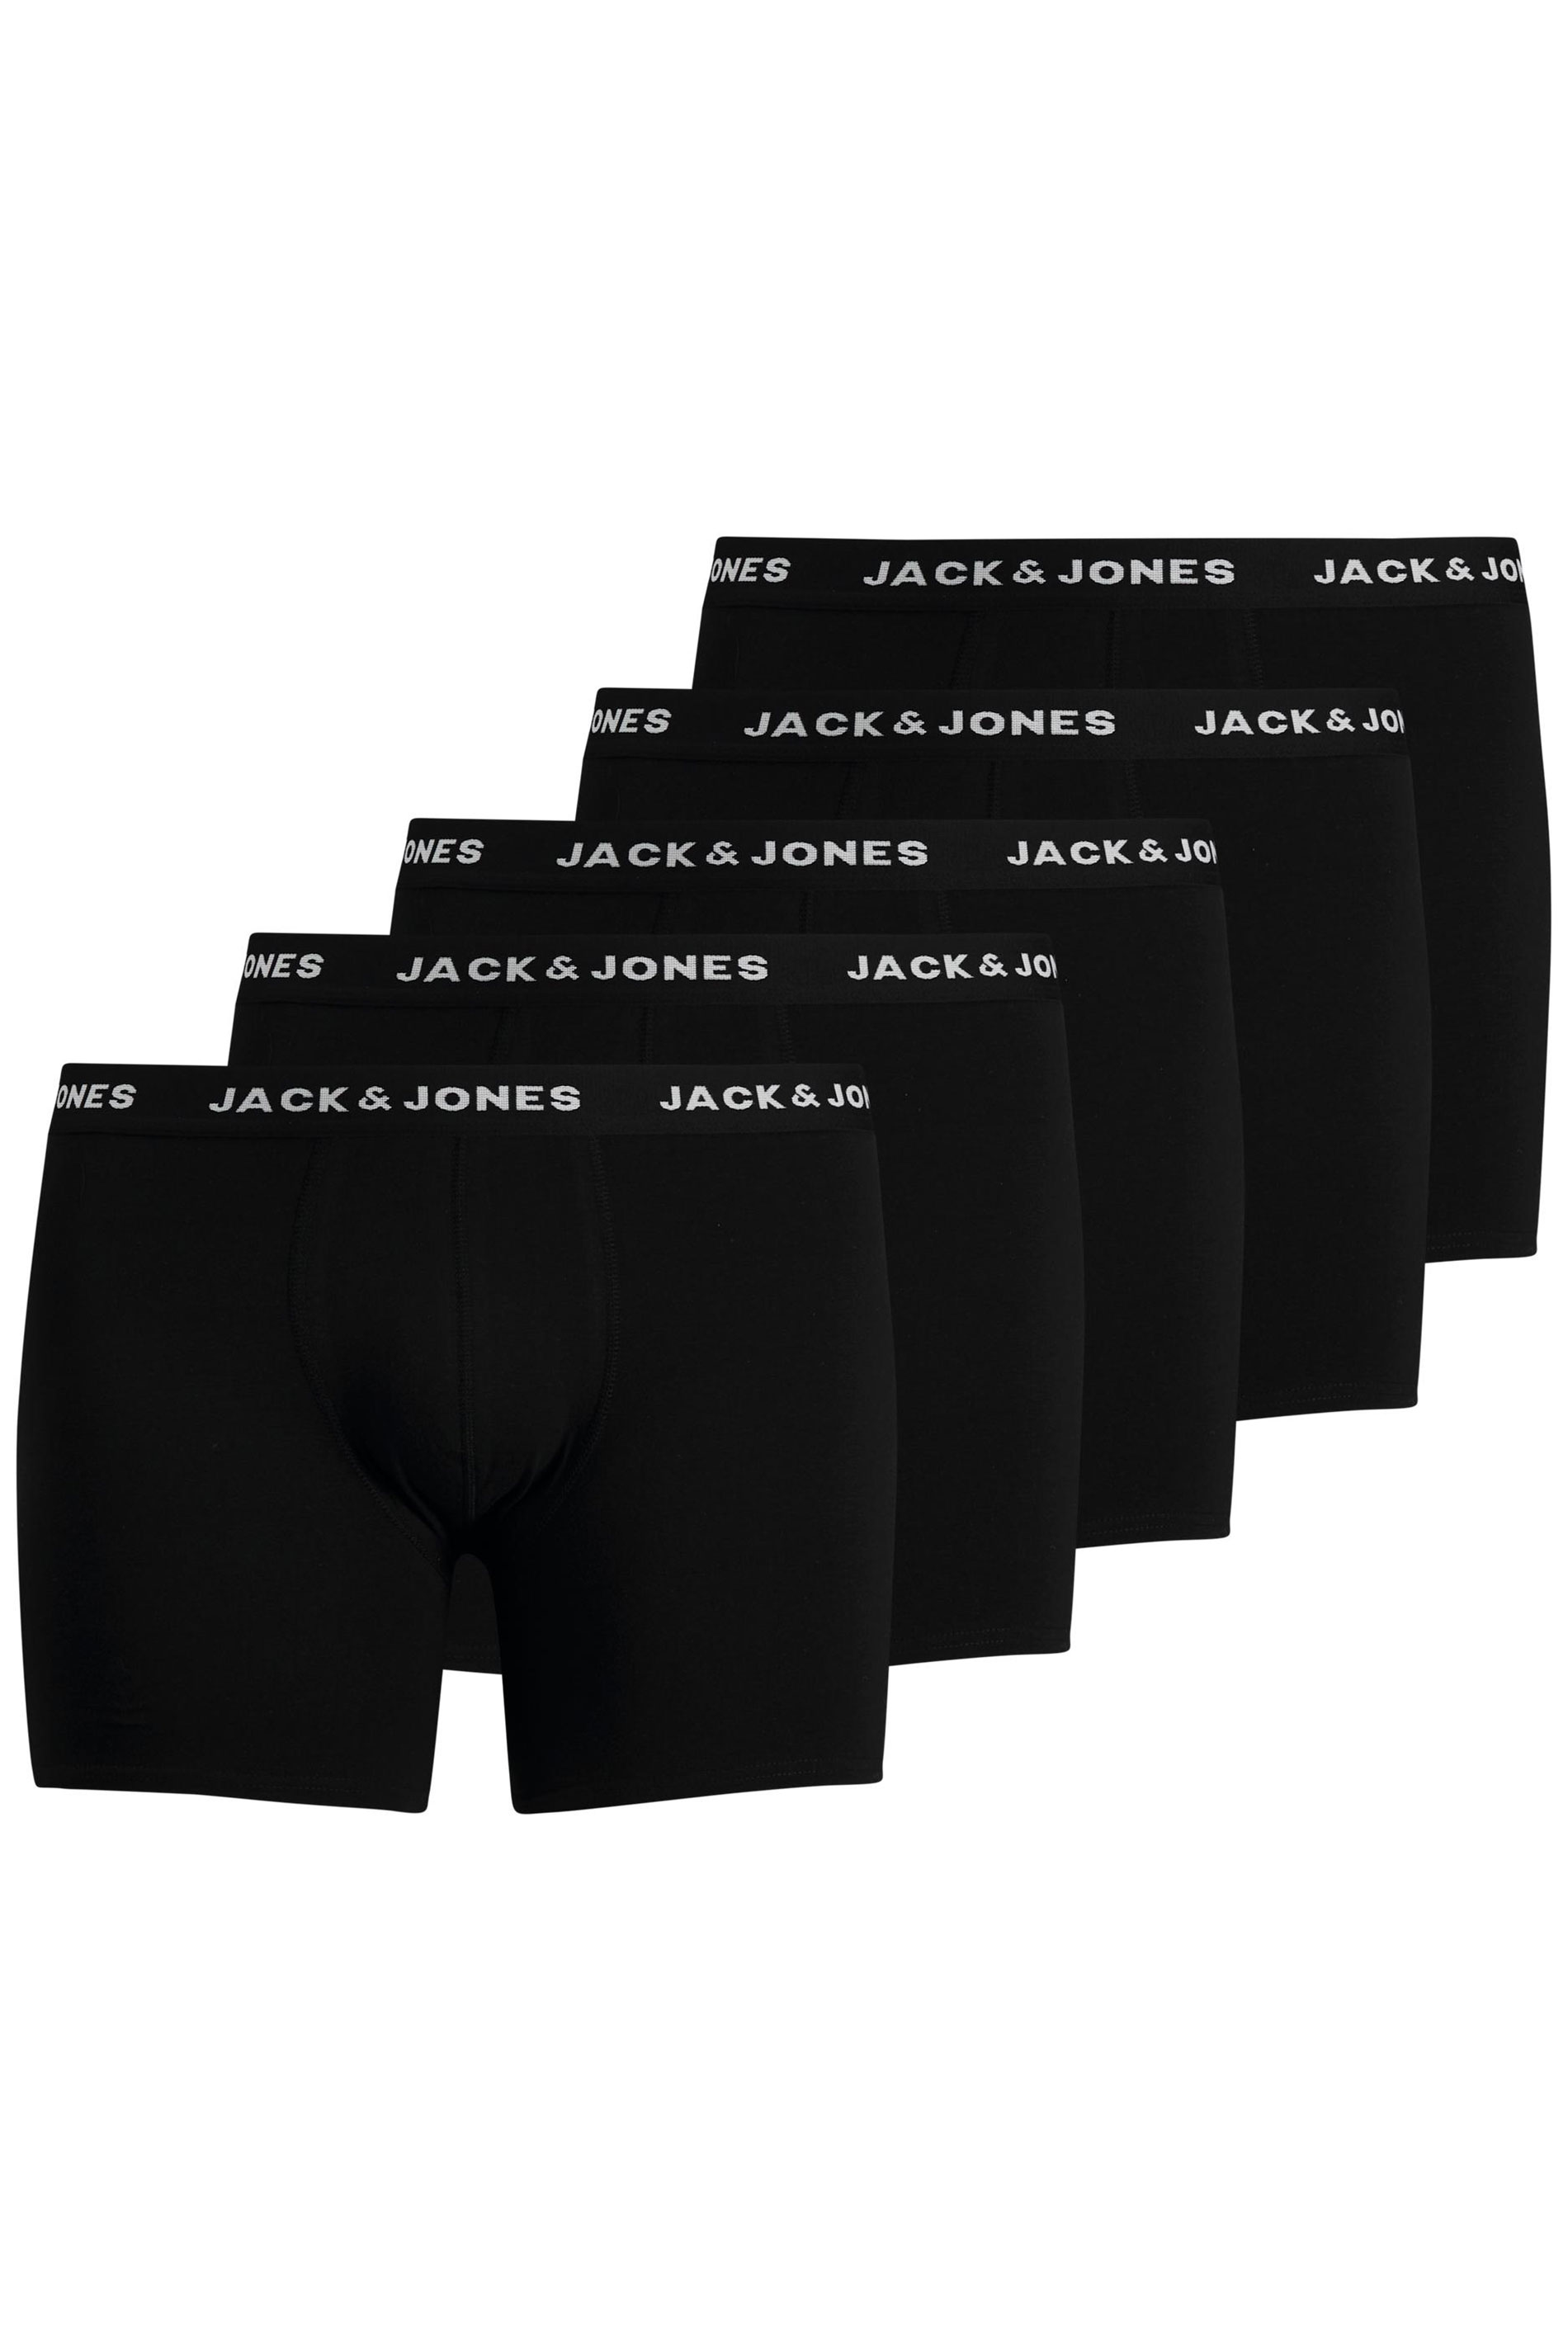 JACK & JONES 5 PACK Black Boxers | BadRhino 3